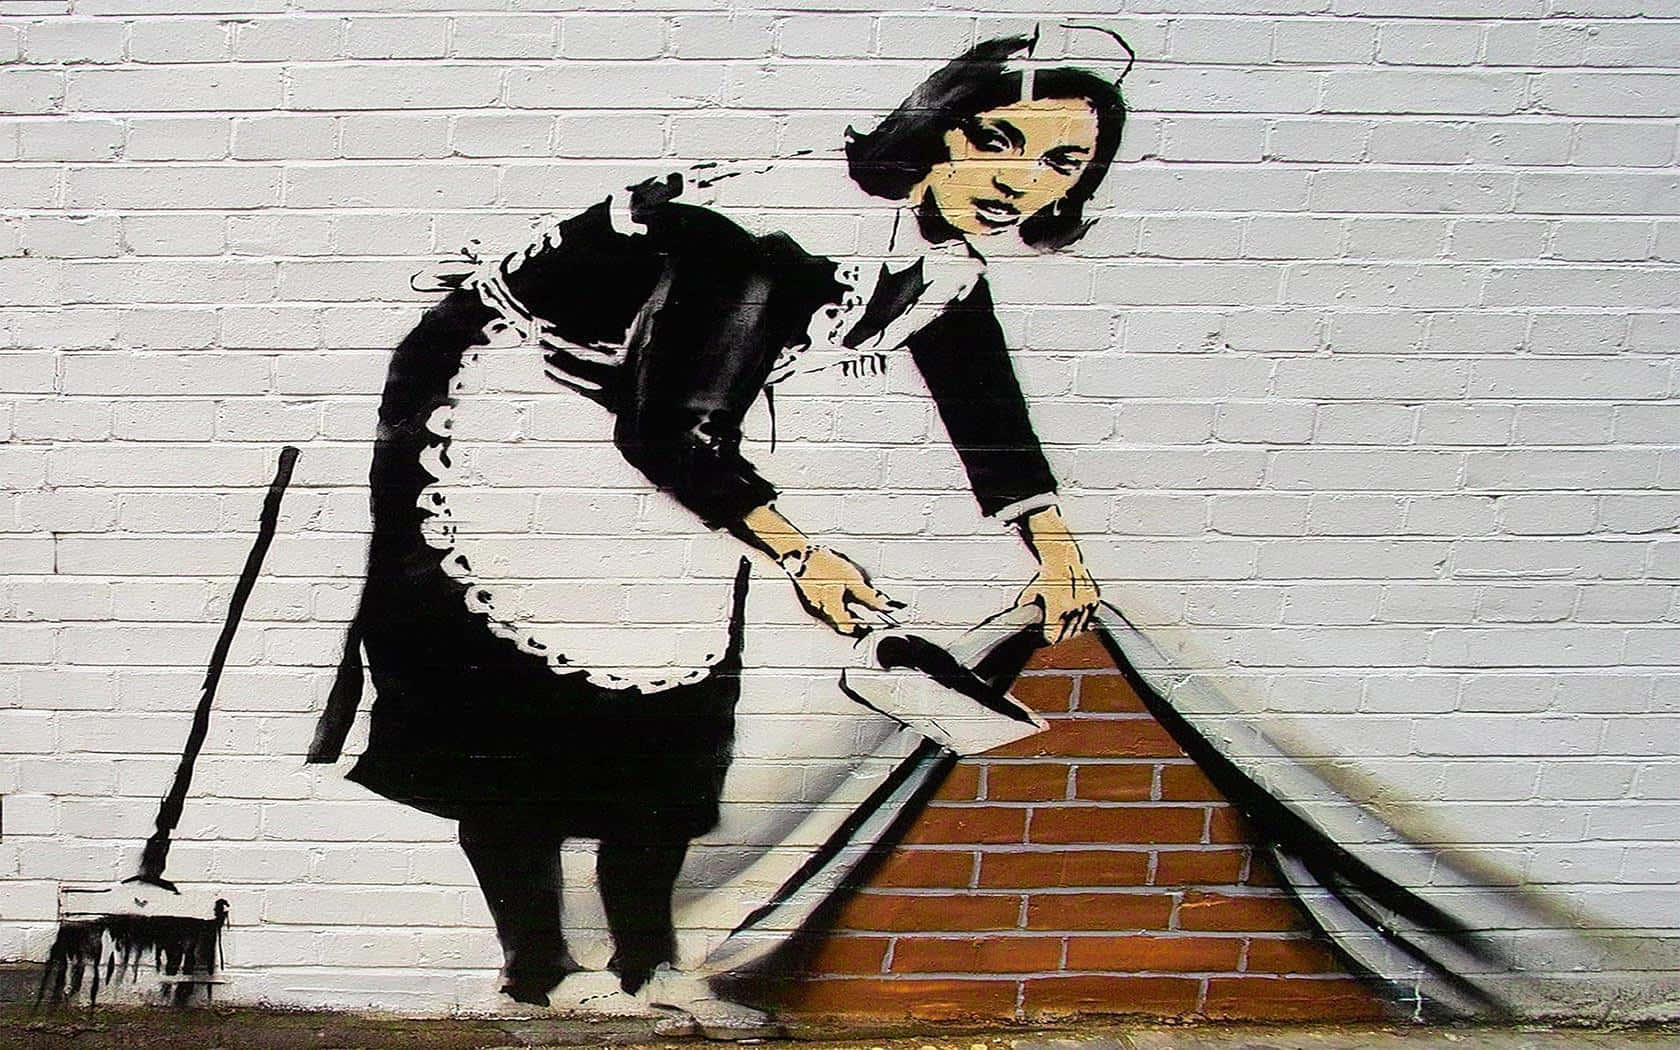 Banksy's street art against the backdrop of an urban landscape